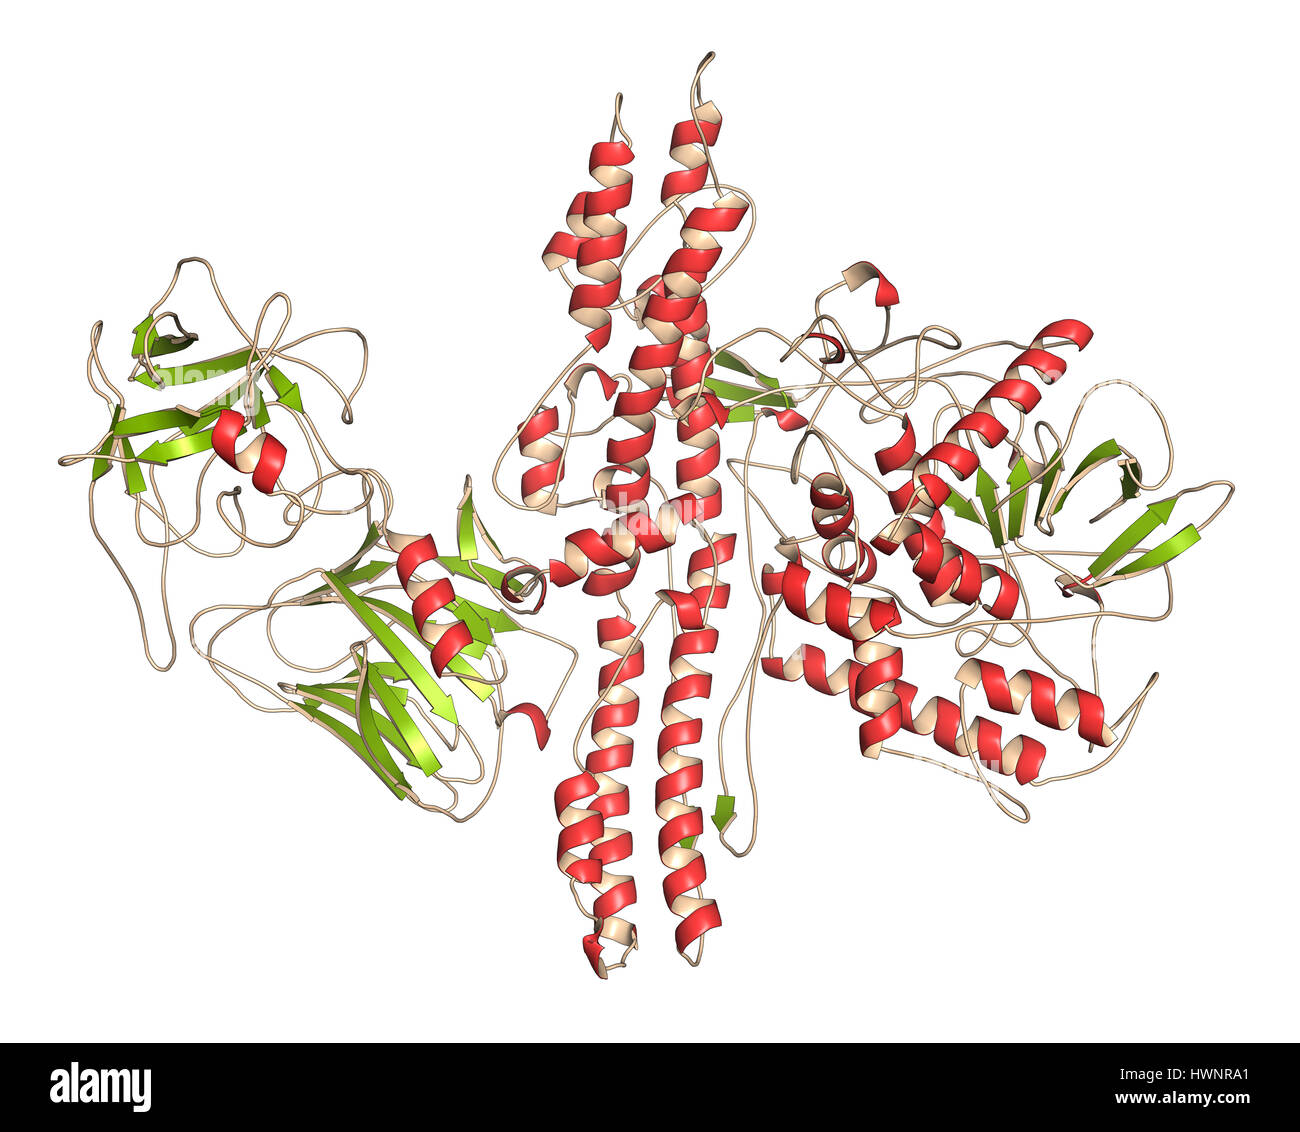 Botulinum toxin neurotoxic protein, 3D rendering. Produced by Clostridium botulinum. Cosmetically used to treat wrinkles. Cartoon representation, seco Stock Photo